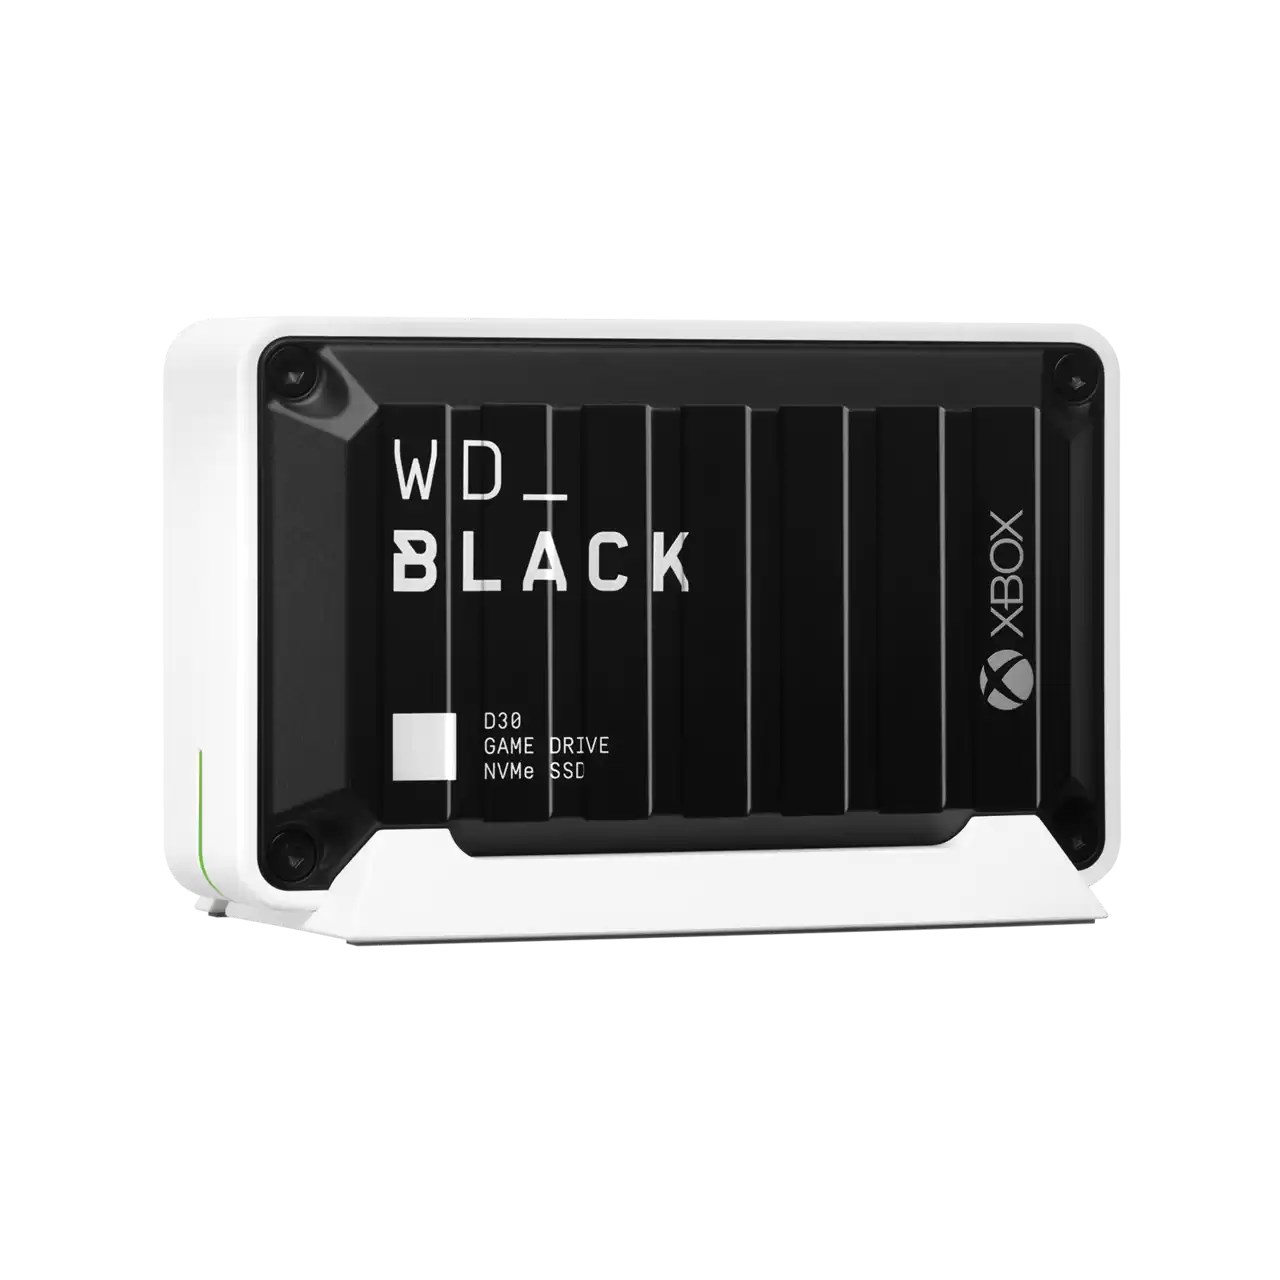 SanDisk externí SSD 1TB WD BLACK D30 Game Drive pro Xbox1 